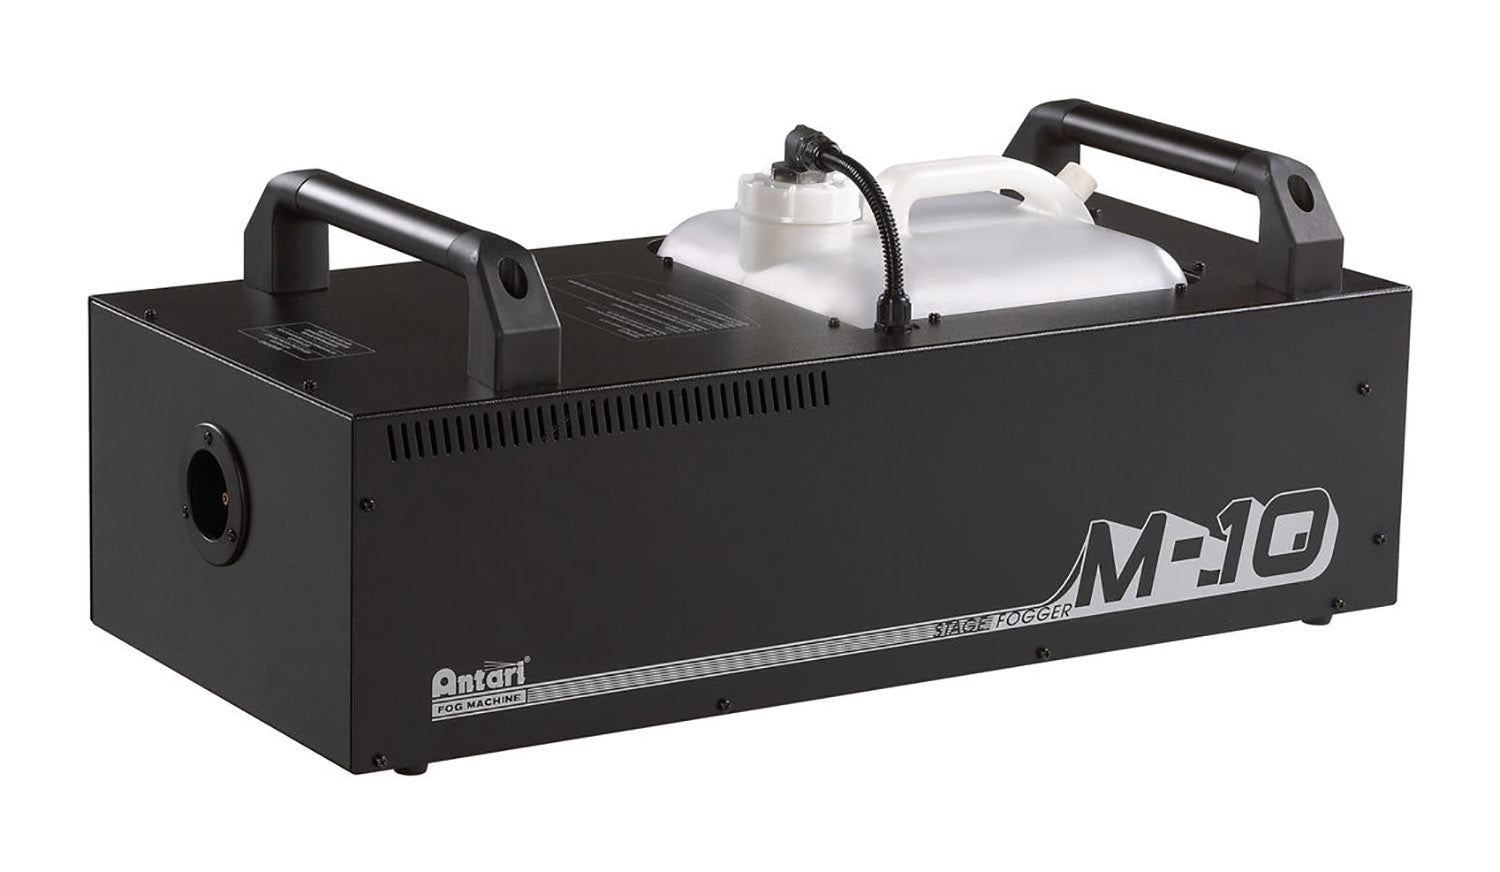 Antari M-10 3000W Super High Output Fog Machine with Timer - 220V Operation Only - Hollywood DJ